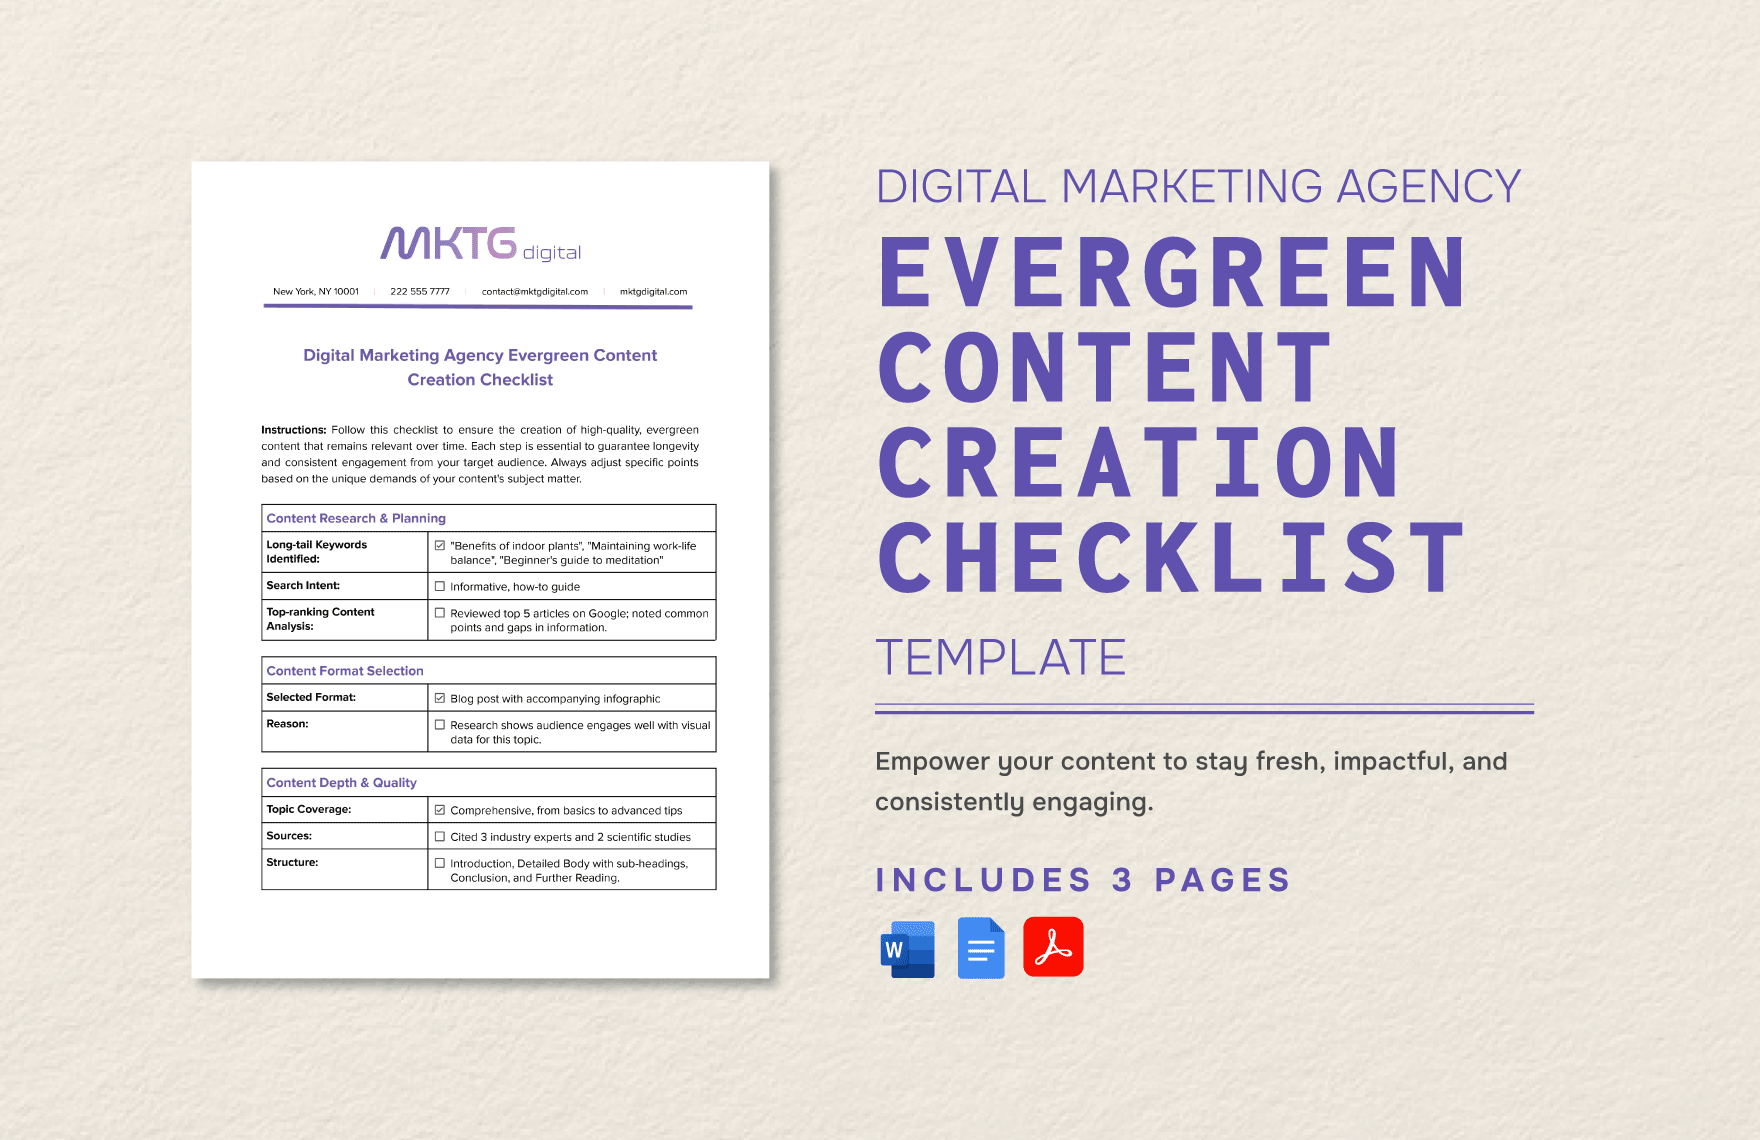 Digital Marketing Agency Evergreen Content Creation Checklist Template